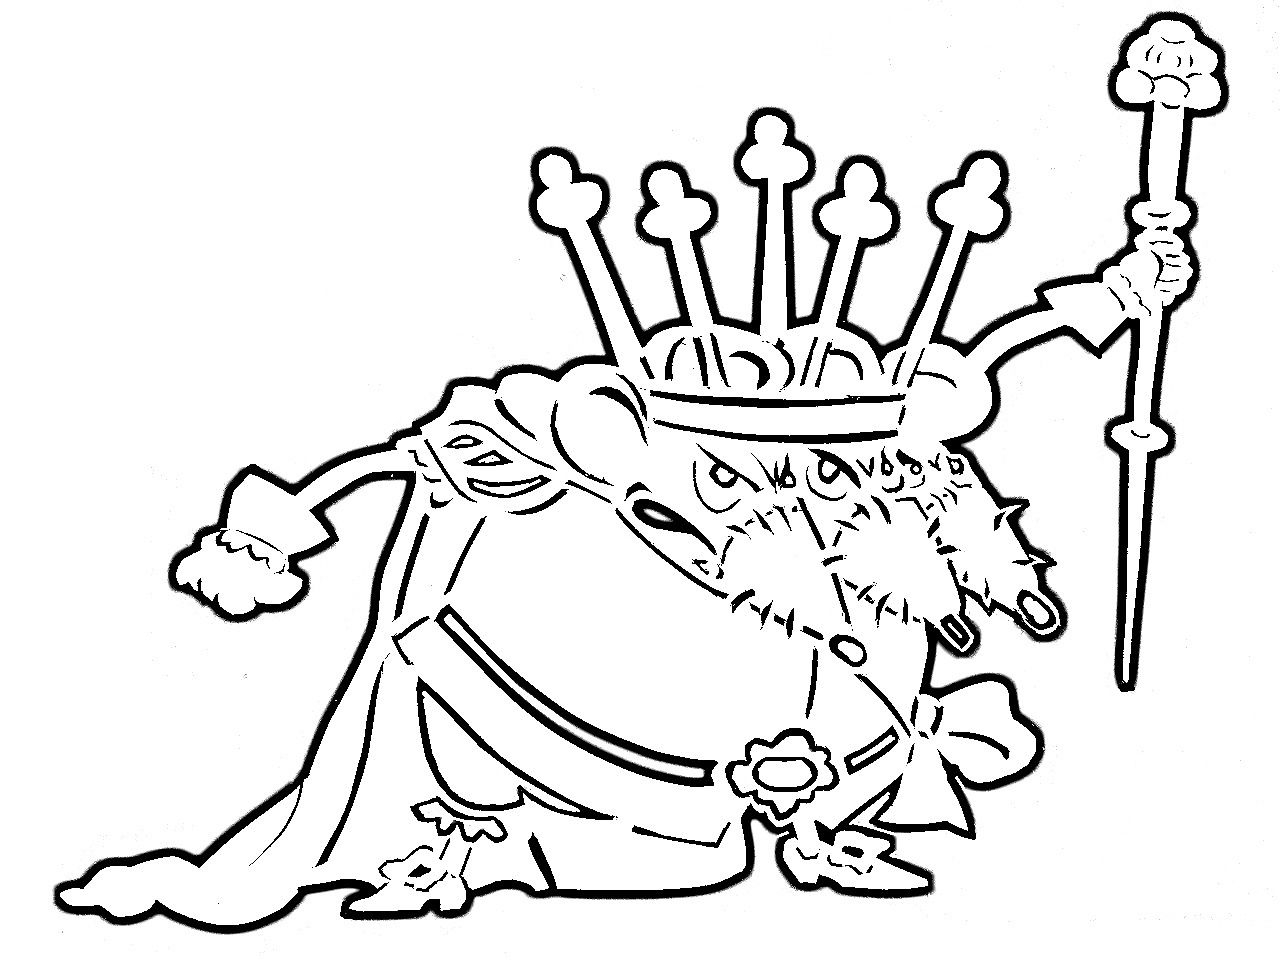 Щелкунчик и мышиный король рисунок карандашом